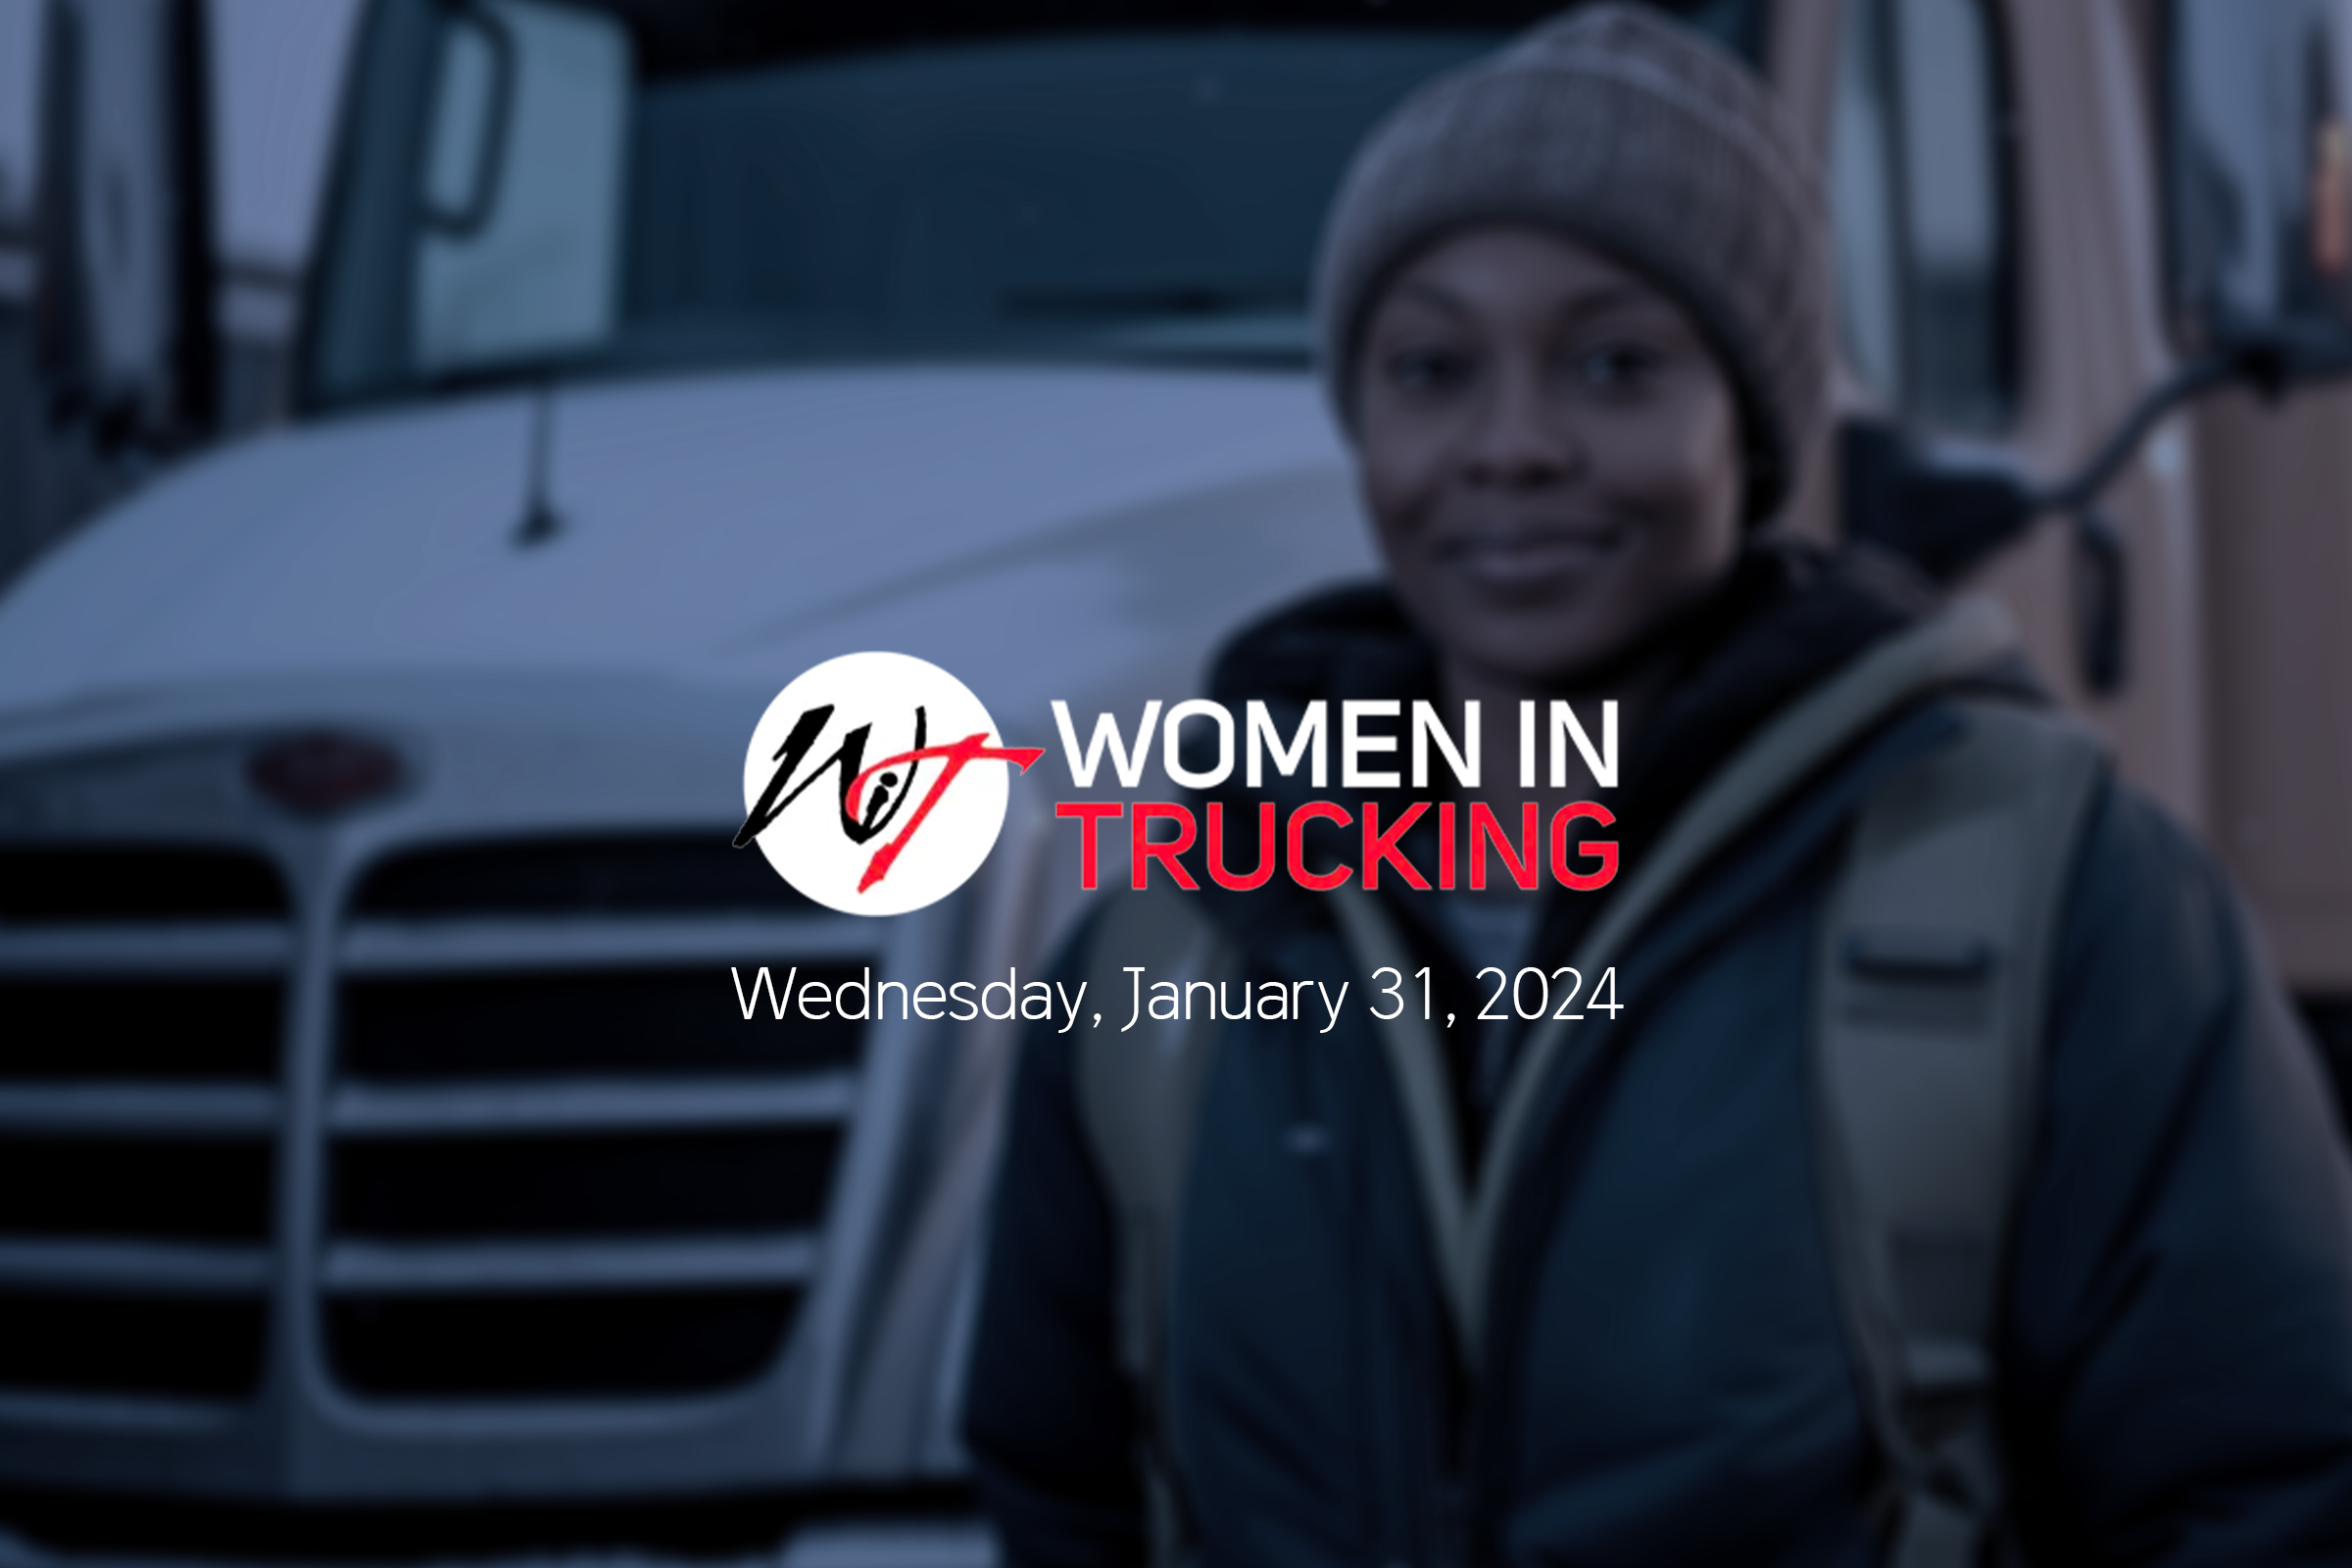 cj logistics america, women in trucking 3pl